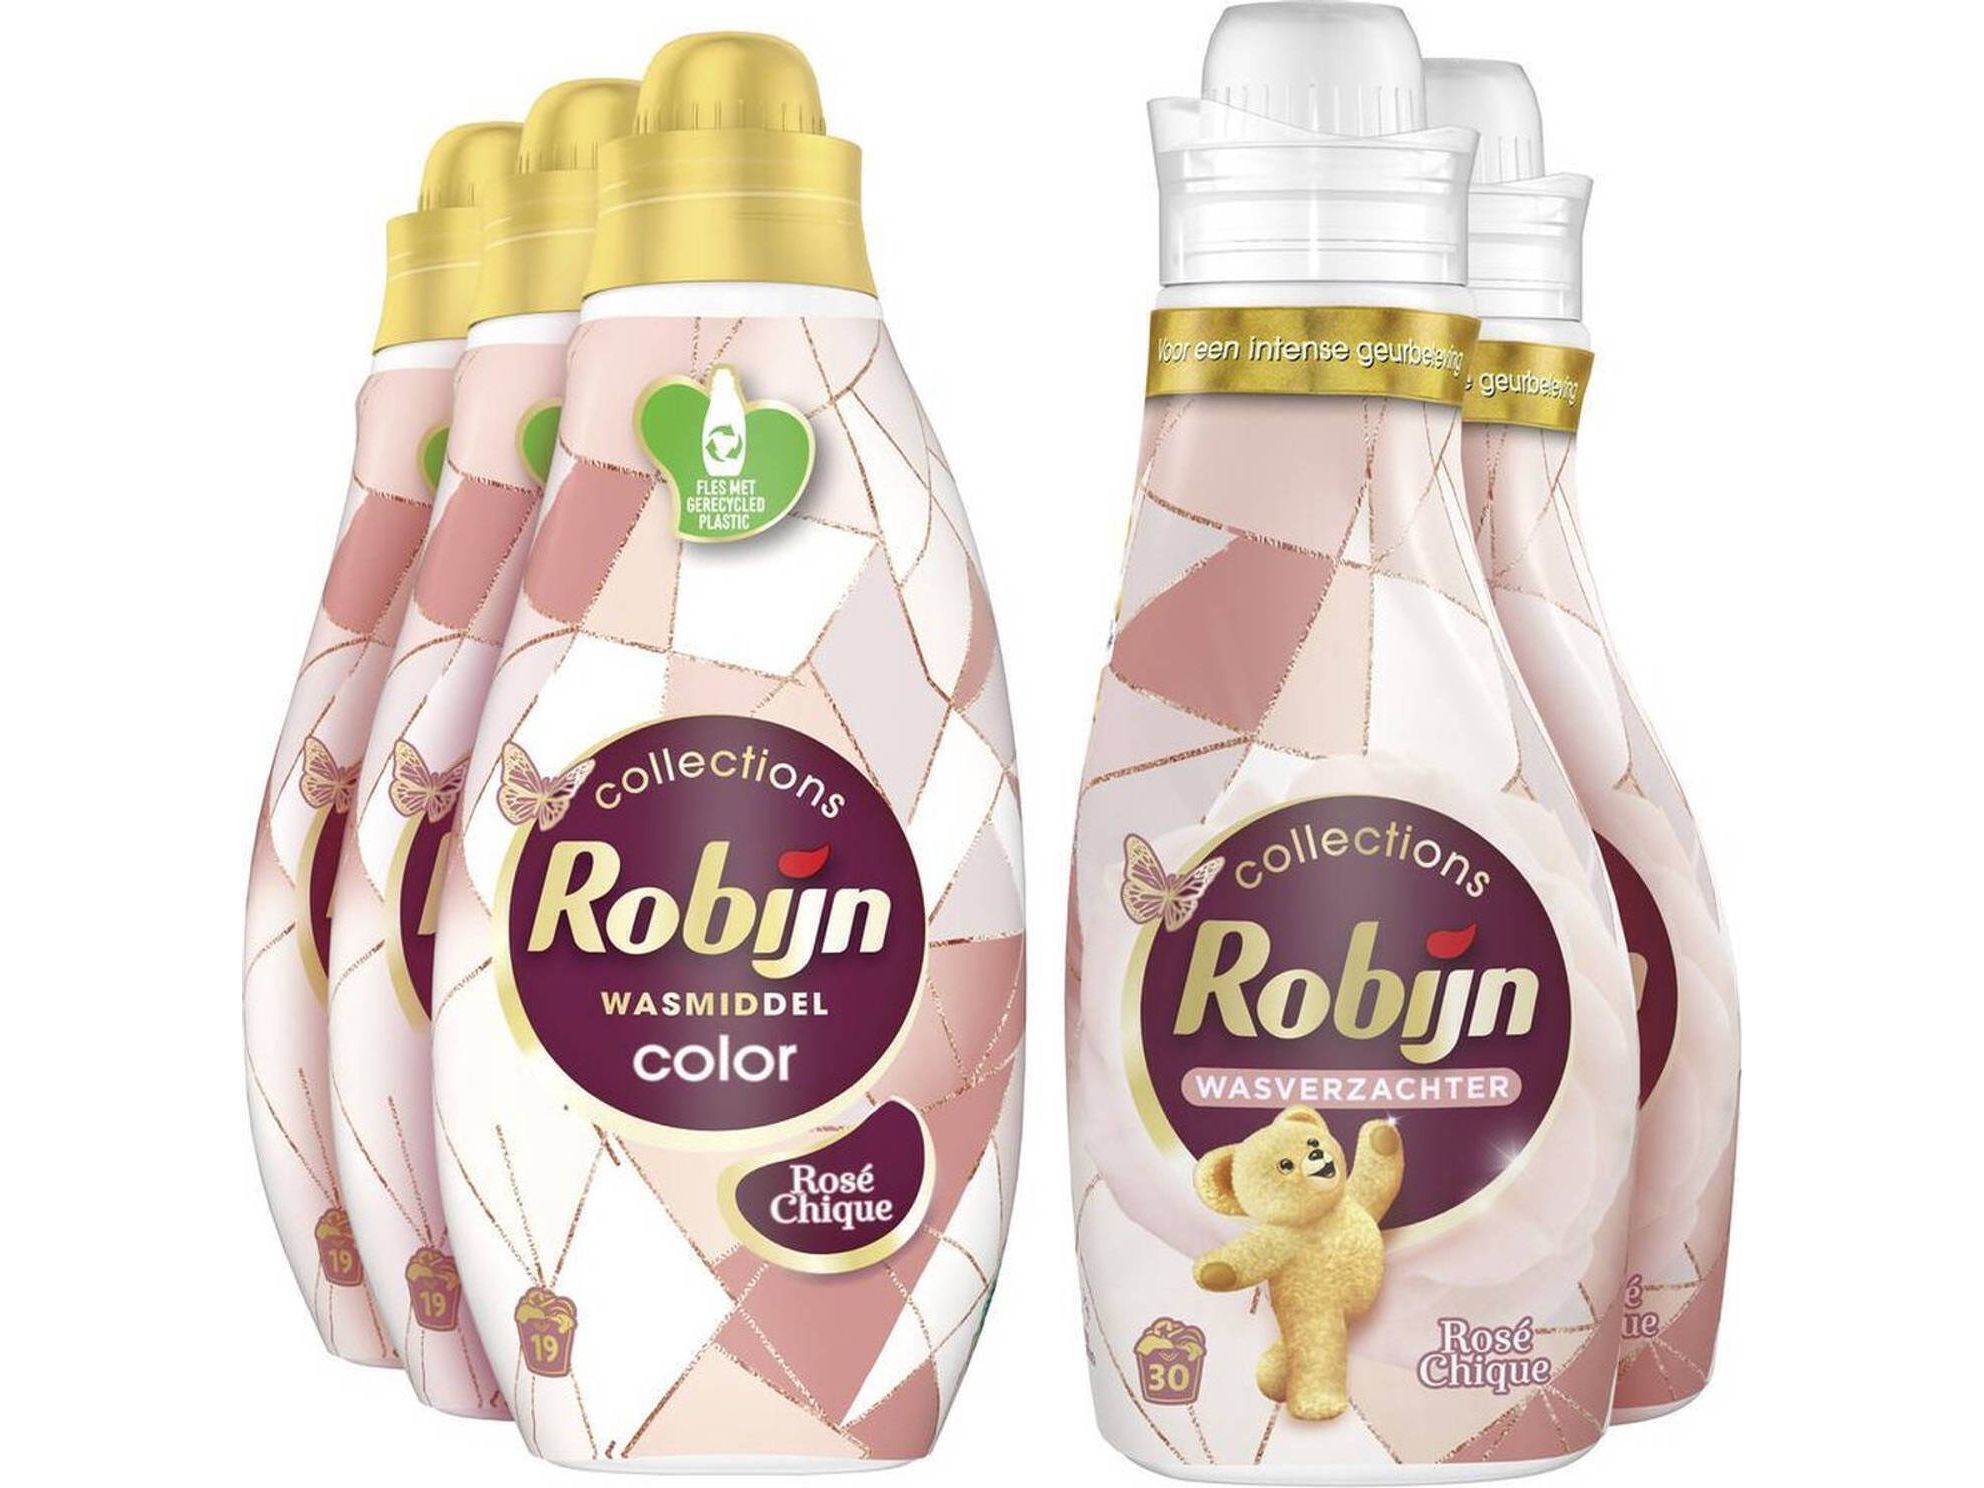 robijn-perfect-match-pakket-rose-chique